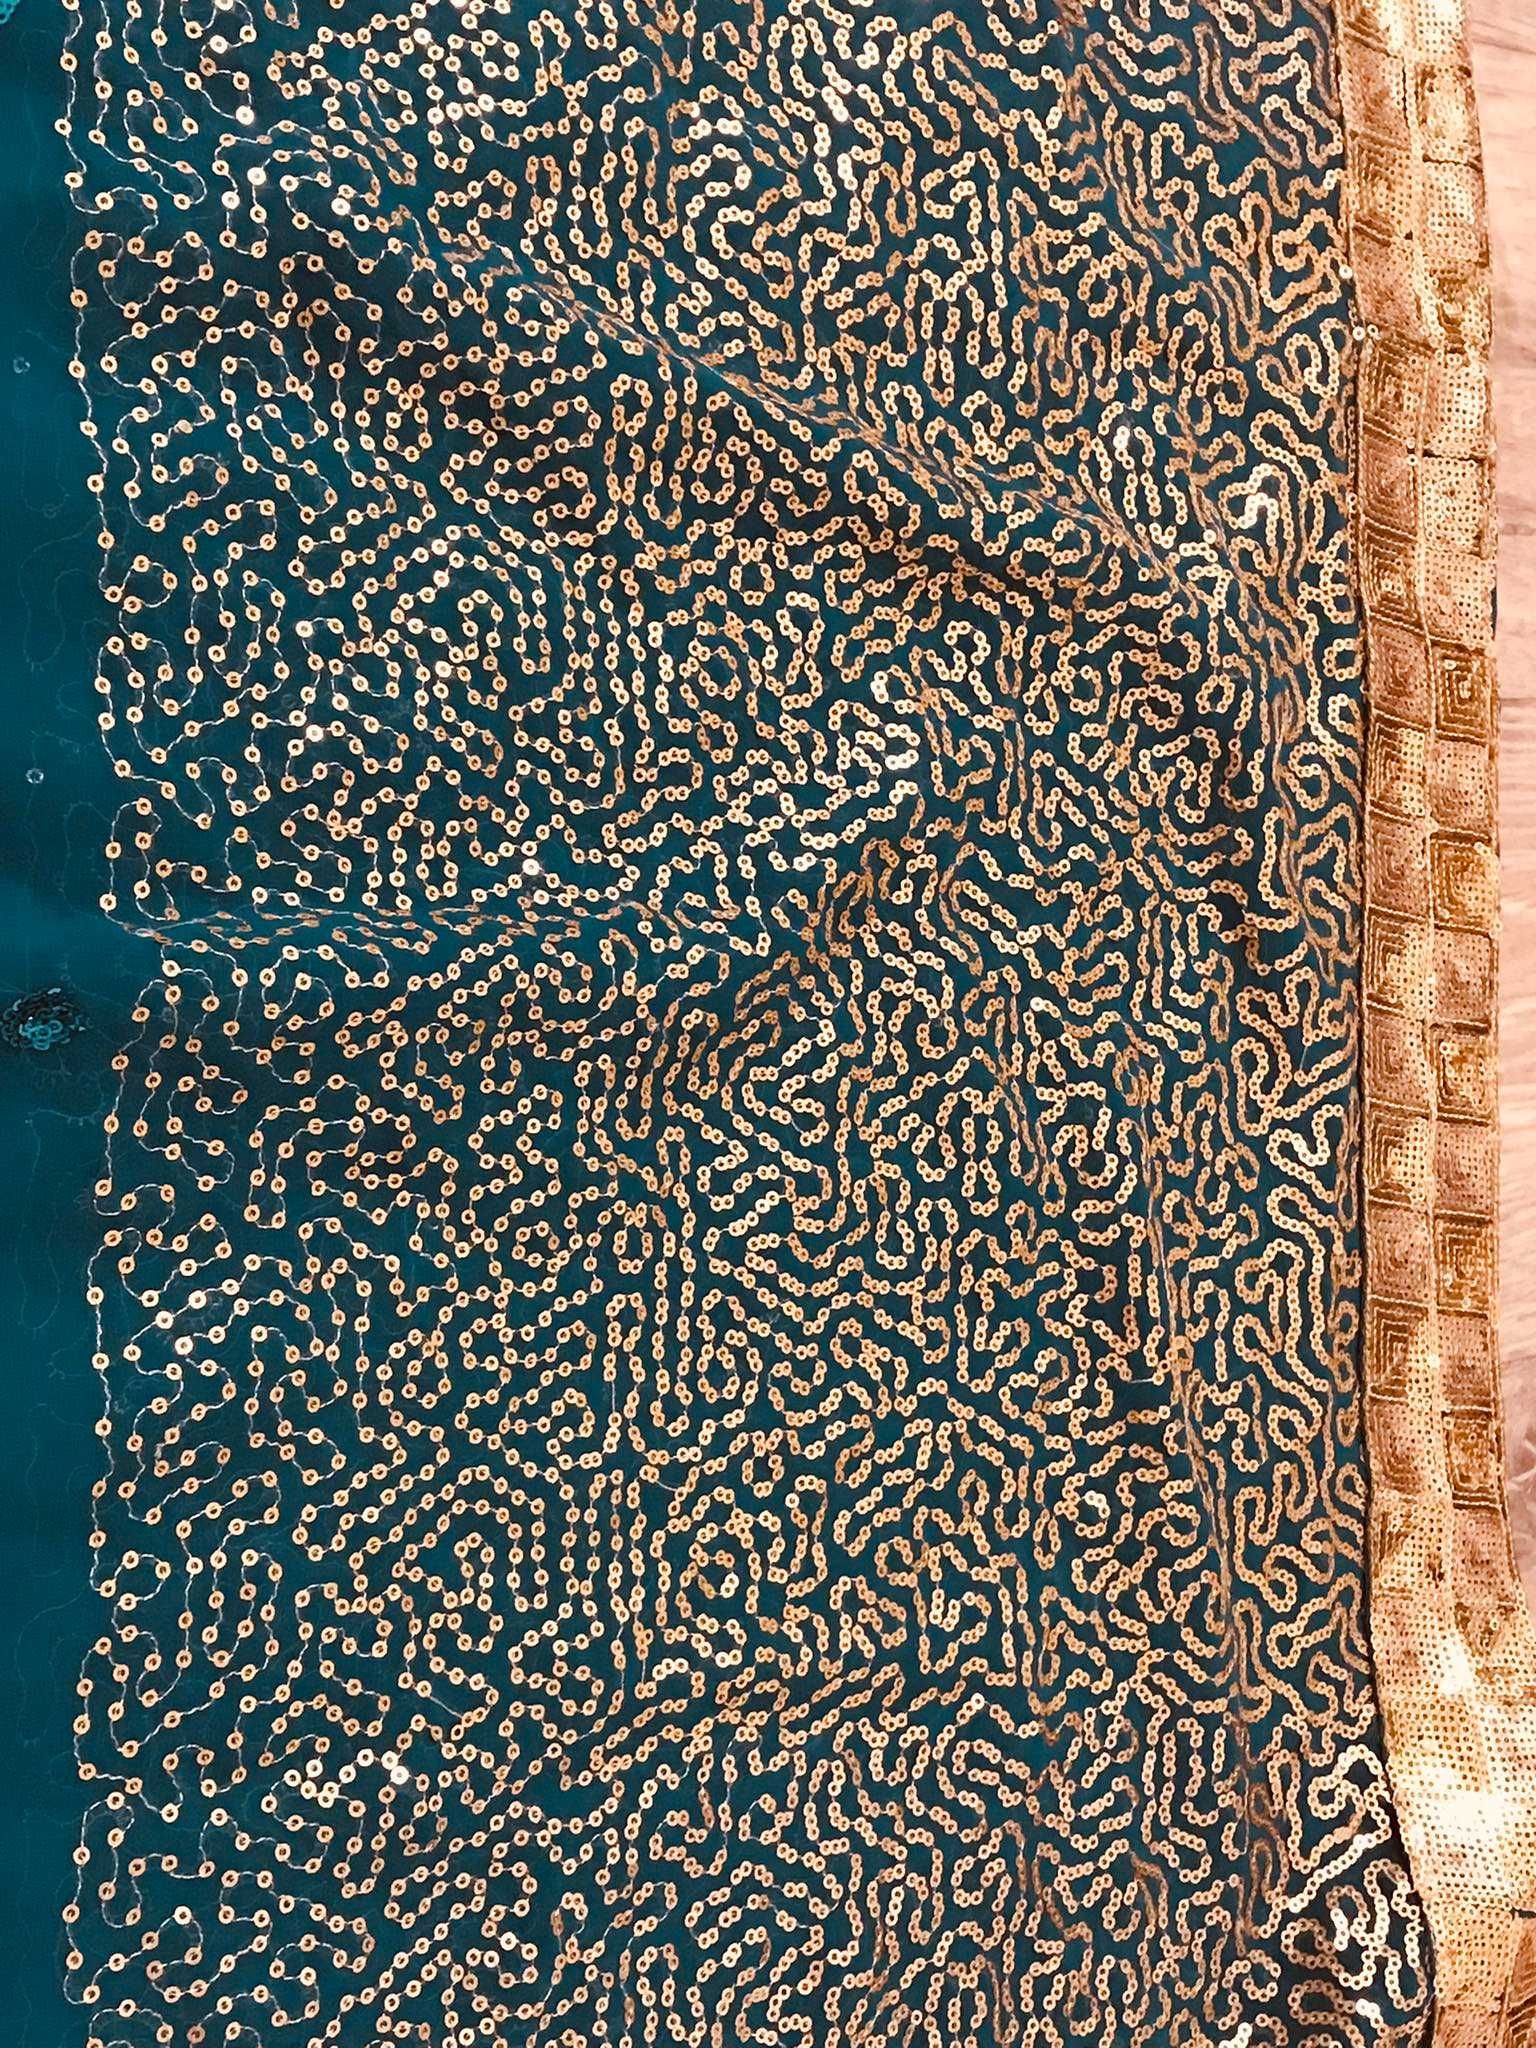 Сари из Индии зеленая бирюза расшито золотыми паетками 6,0х1,05м